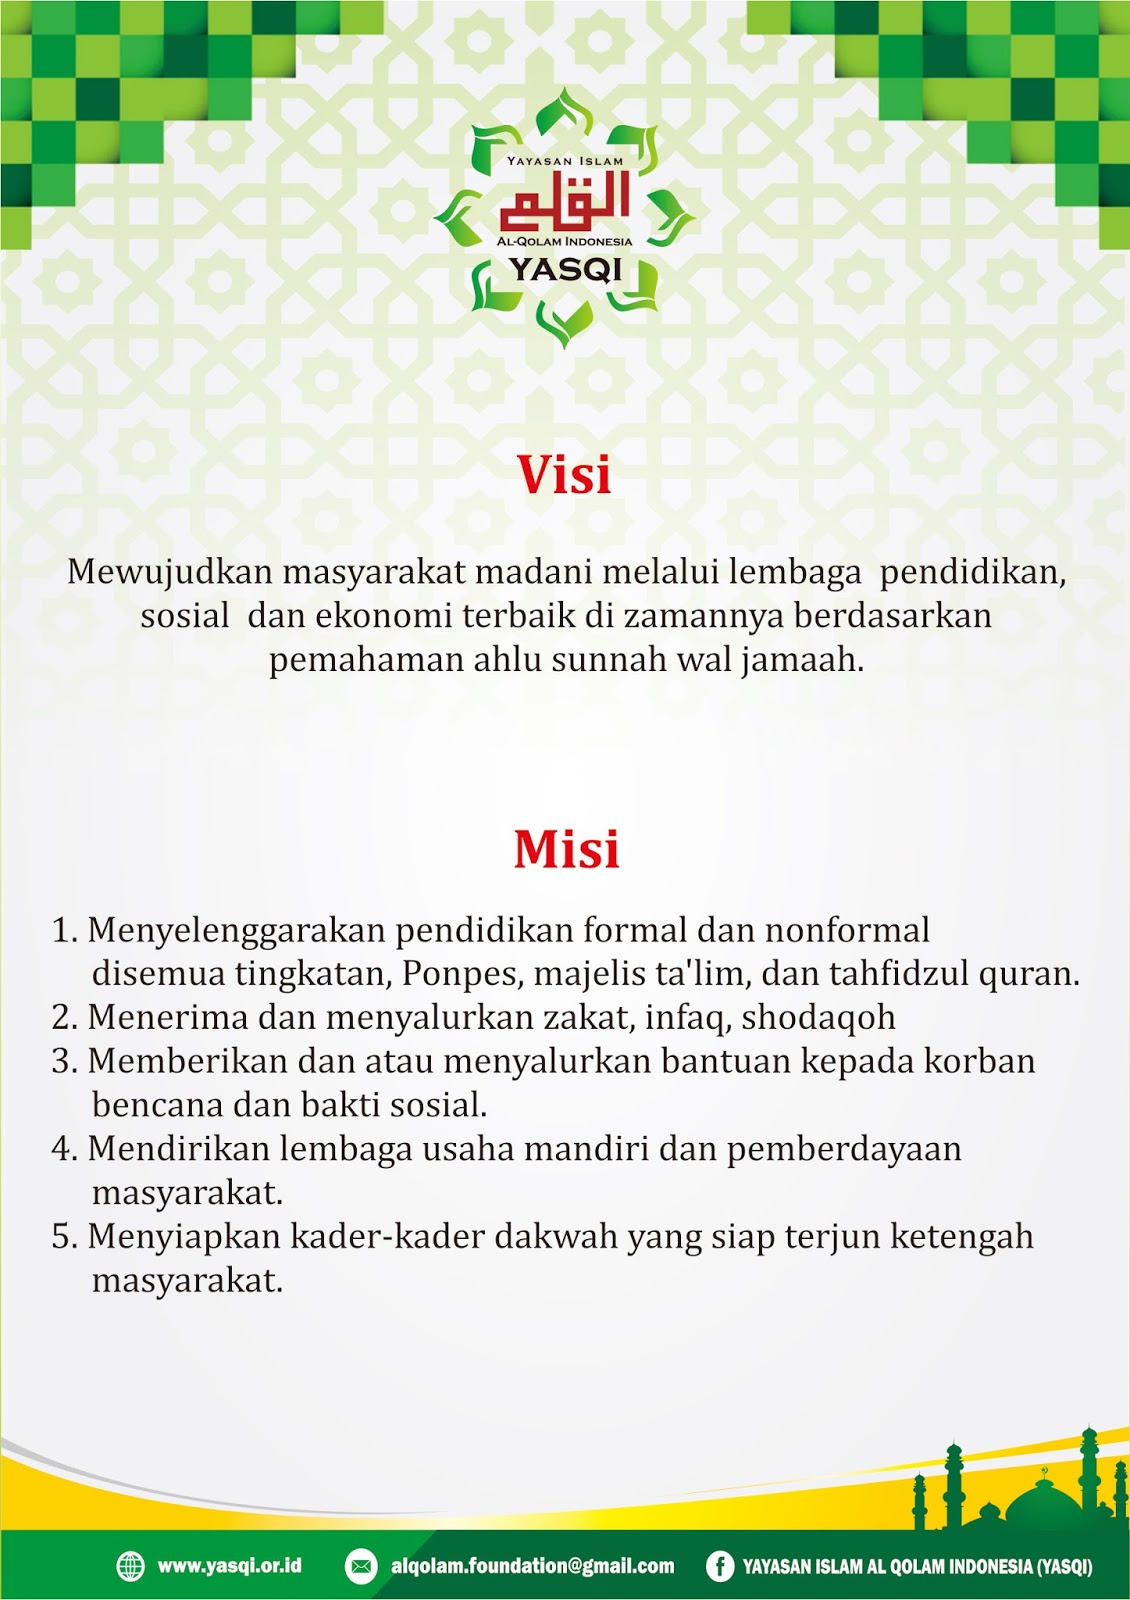 Yayasan Islam Al-Qolam Indonesia: VISI MISI YAYASAN ISLAM AL-QOLAM